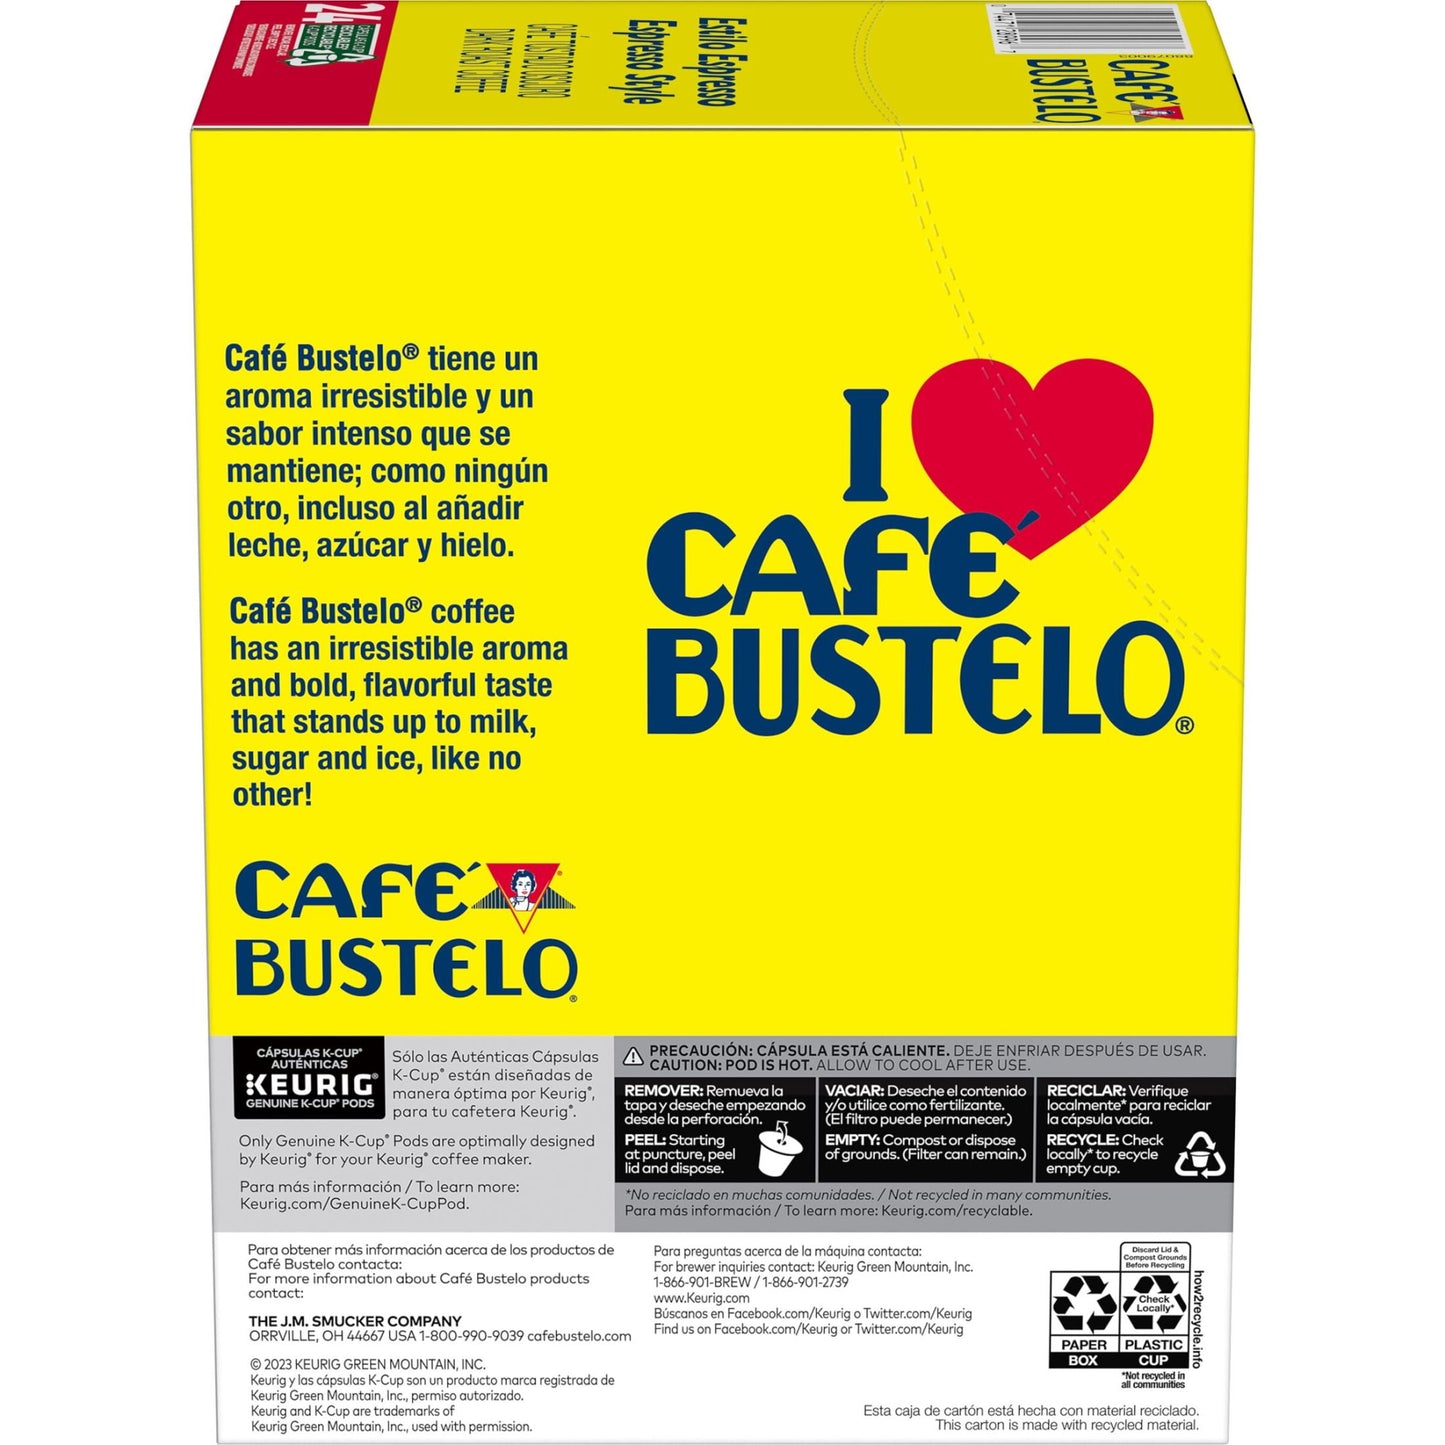 Cafe Bustelo Espresso Style, Dark Roast Coffee, Keurig K-Cup Pods, 24